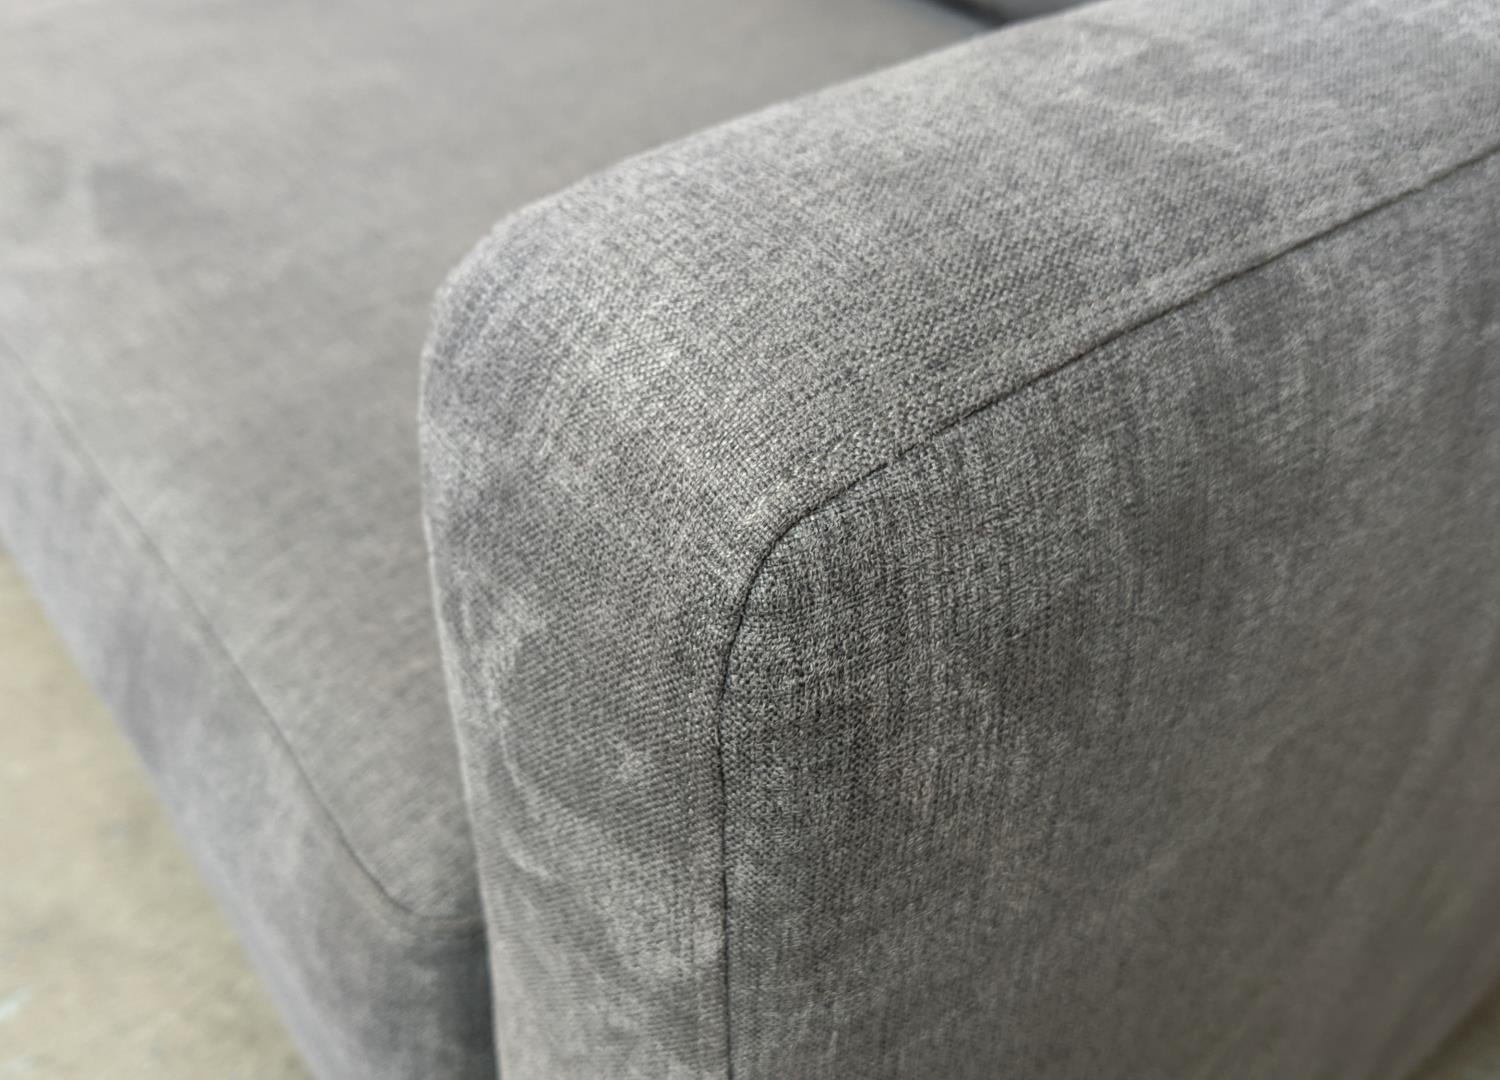 SOFA, grey upholstery, 78cm H x 188cm W. - Image 5 of 8